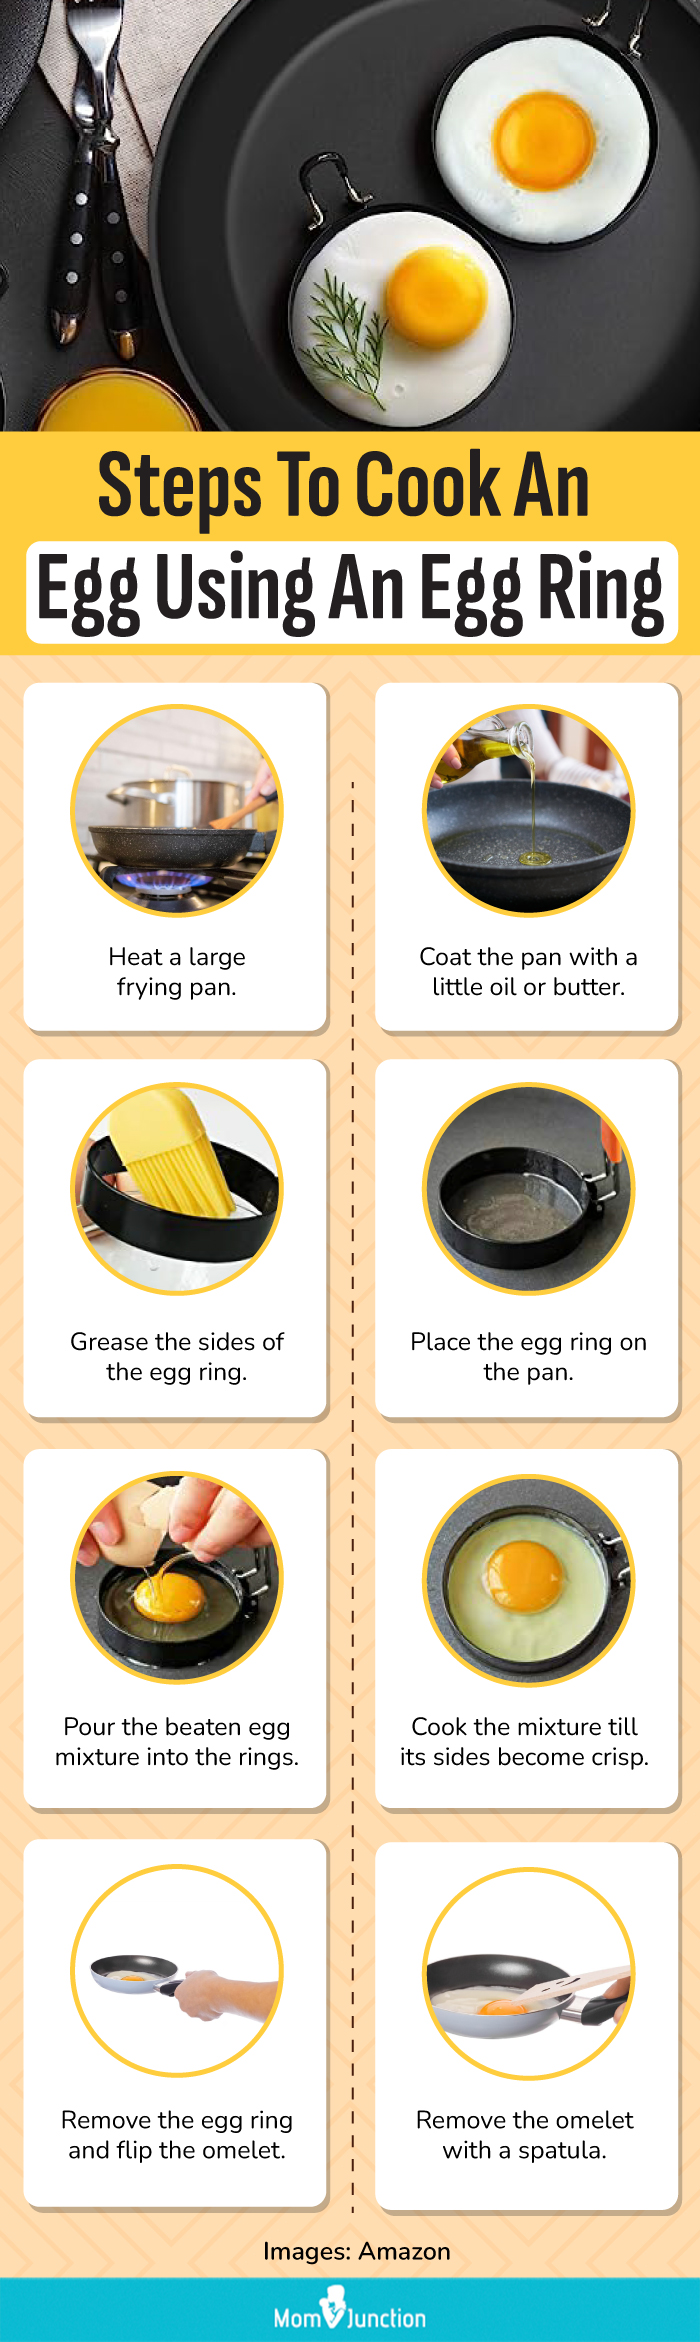 https://www.momjunction.com/wp-content/uploads/2020/06/Steps-To-Cook-An-Egg-Using-An-Egg-Ring.jpg